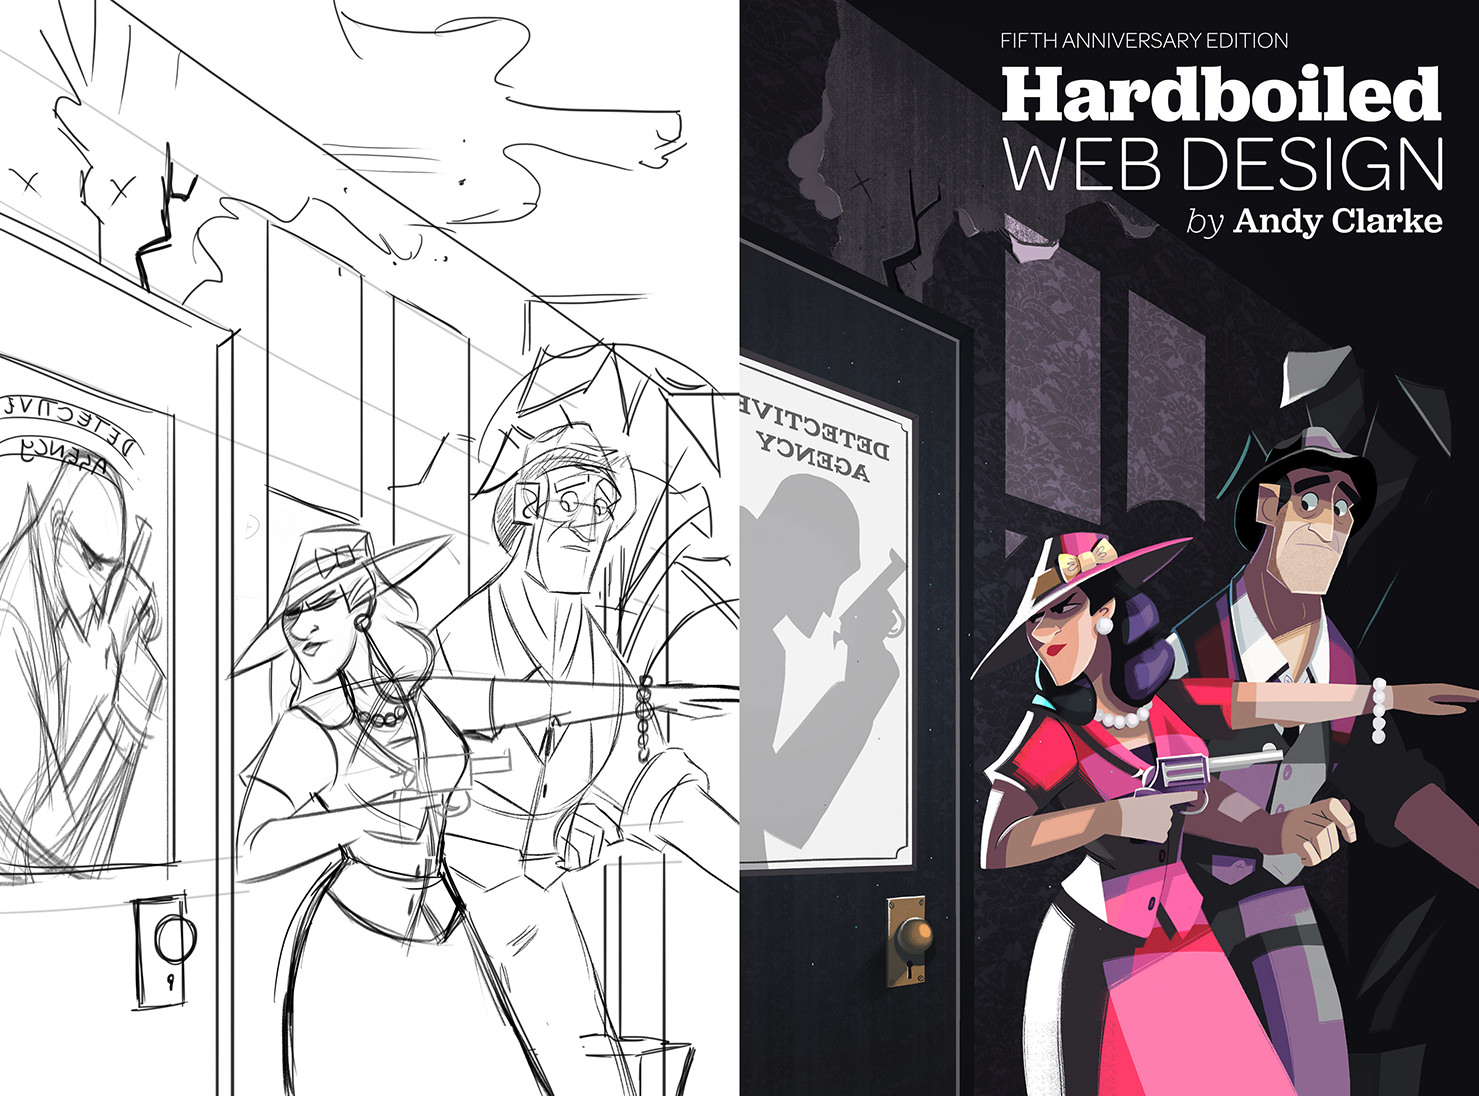 Hardboiled Web Design Fifth Anniversary Edition